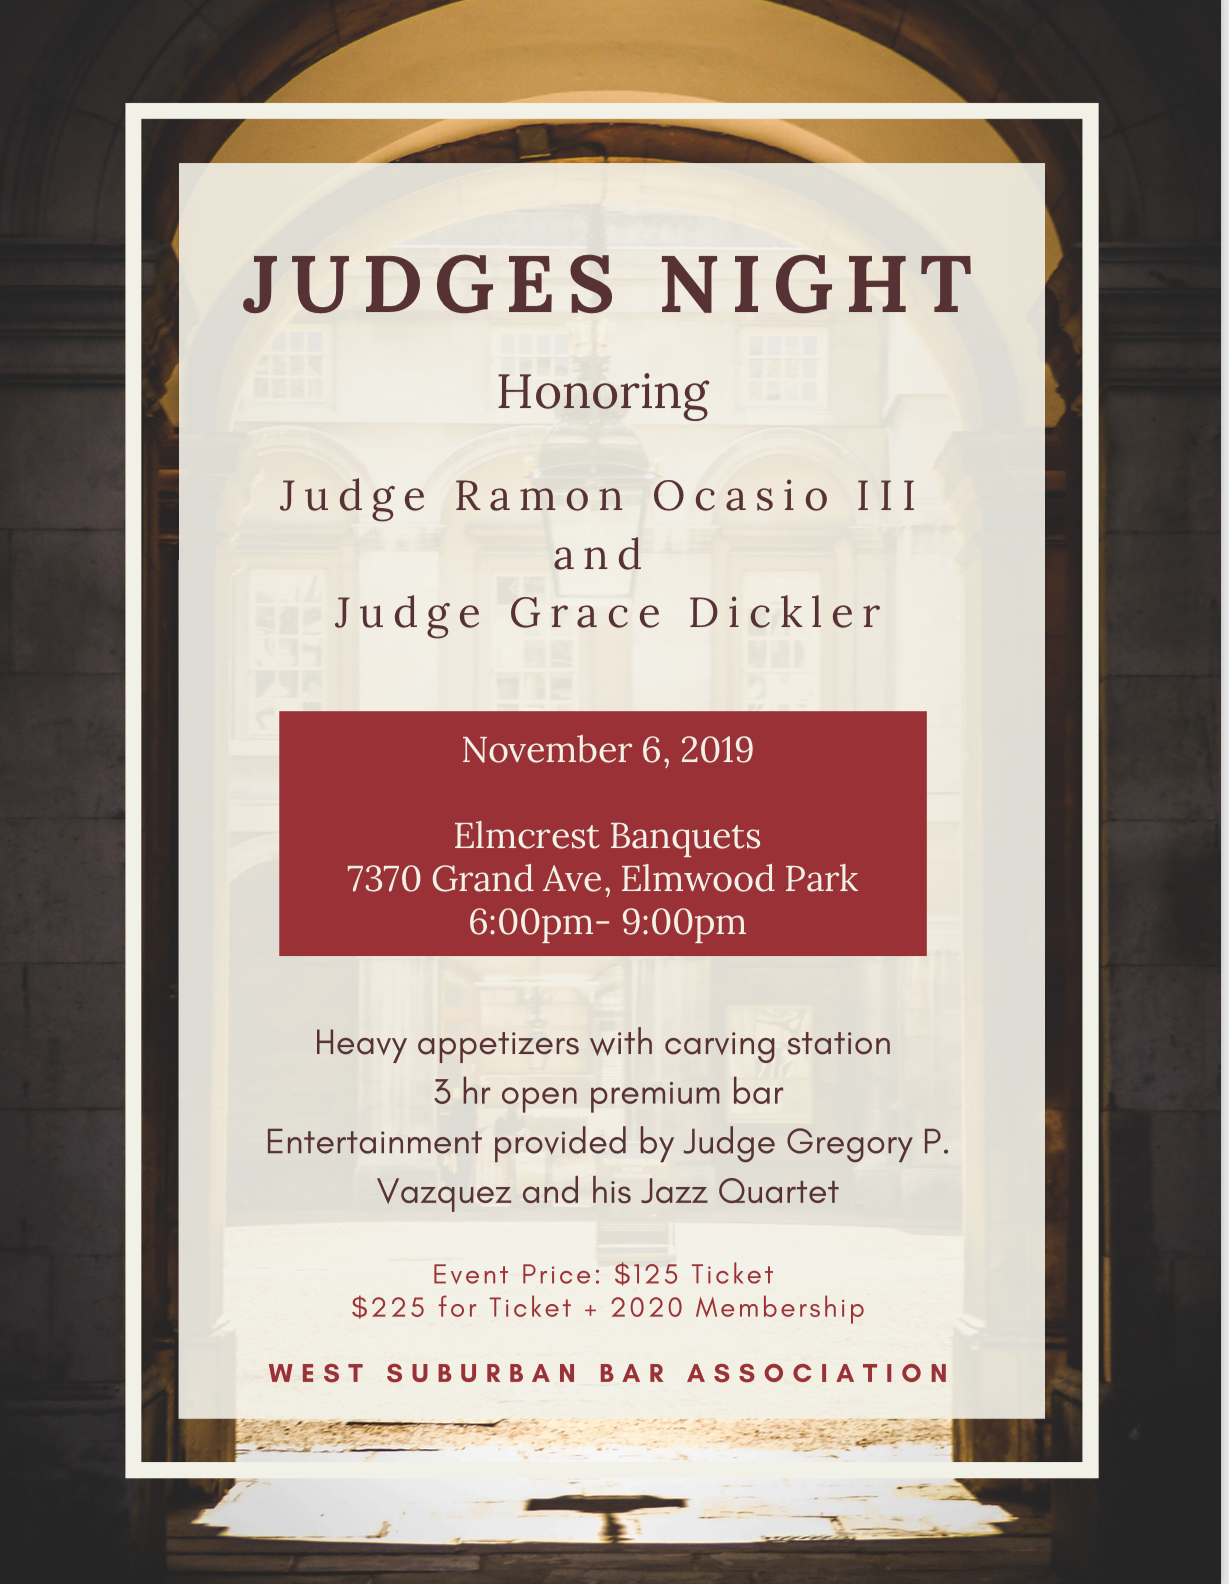 WSBA 6th Annual Judges Night honoring Judge Ramon Ocasio, III and Judge Grace G. Dickler